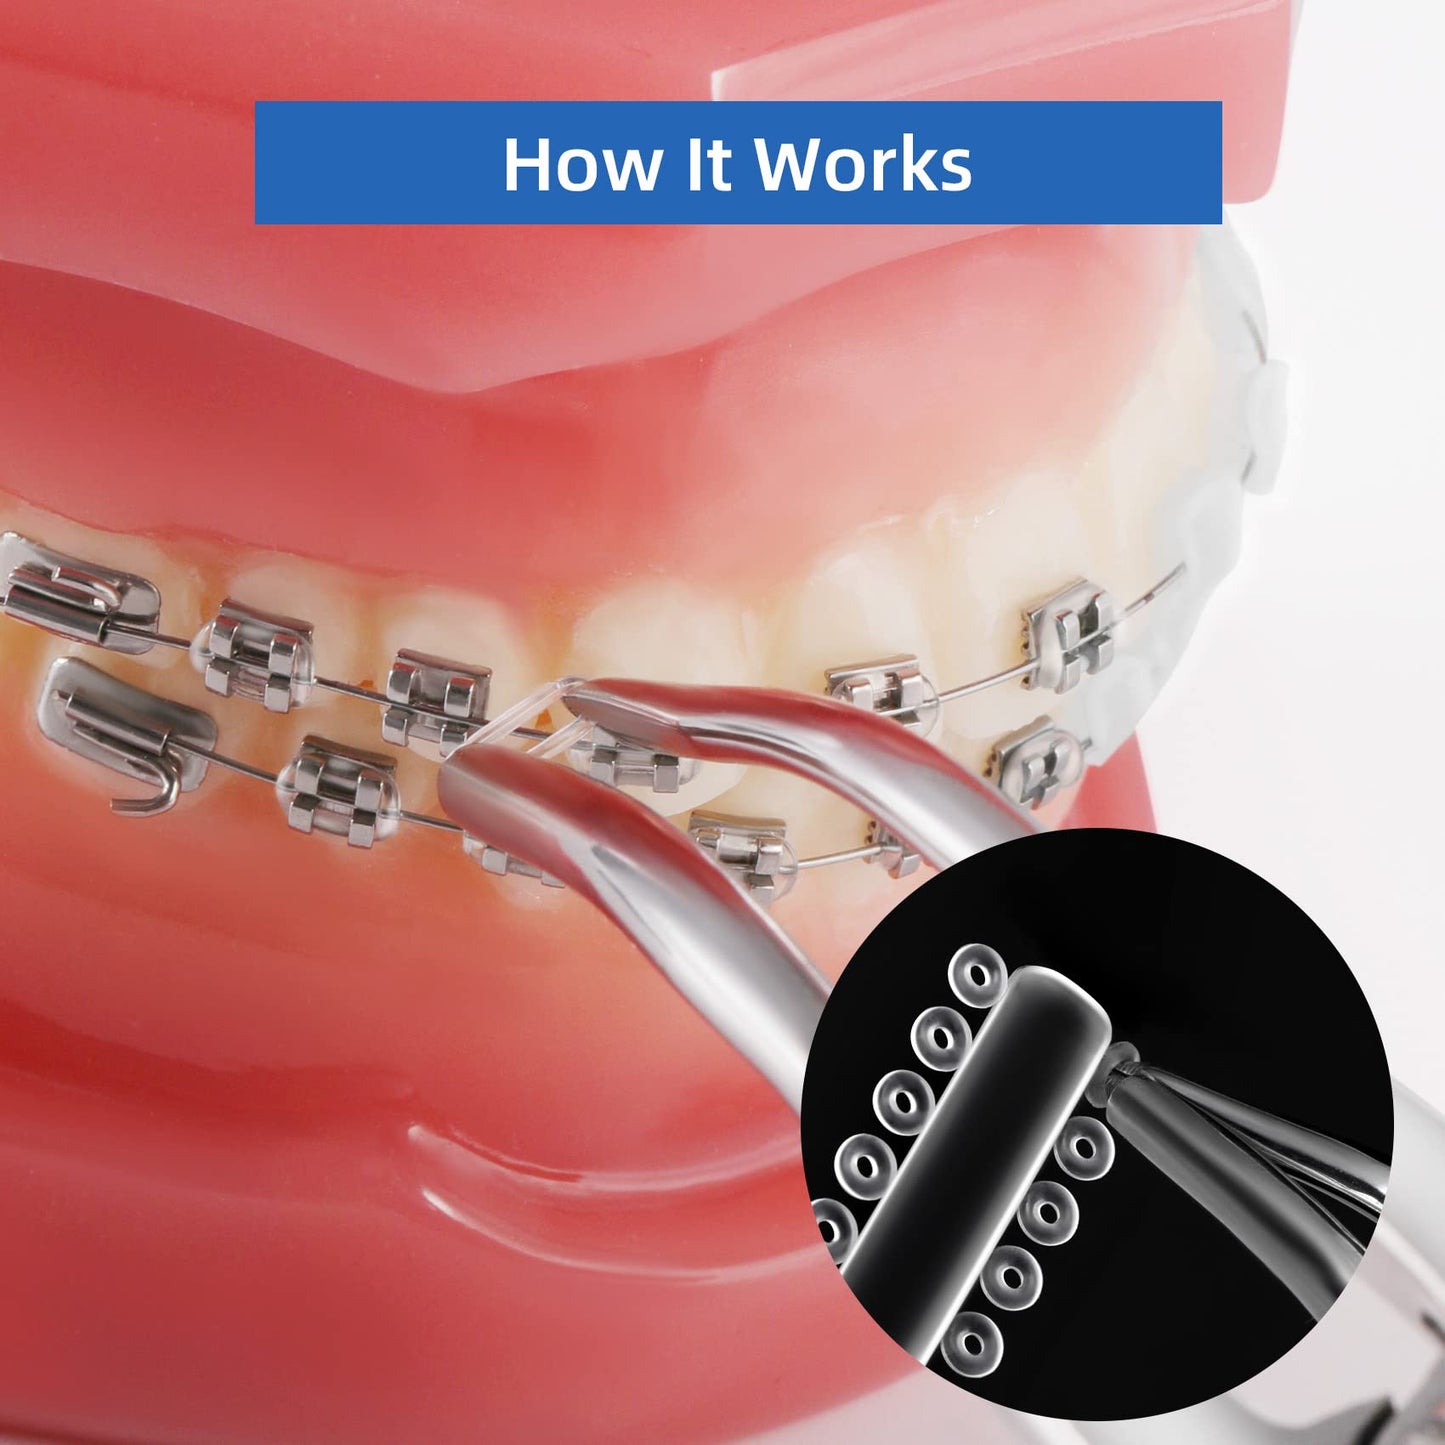 Dental Orthodontic Ligature Ties Braces 1040 Pcs, Ortho Braces Color Bands Ligature Ties Elastomeric O-Rings for Braces